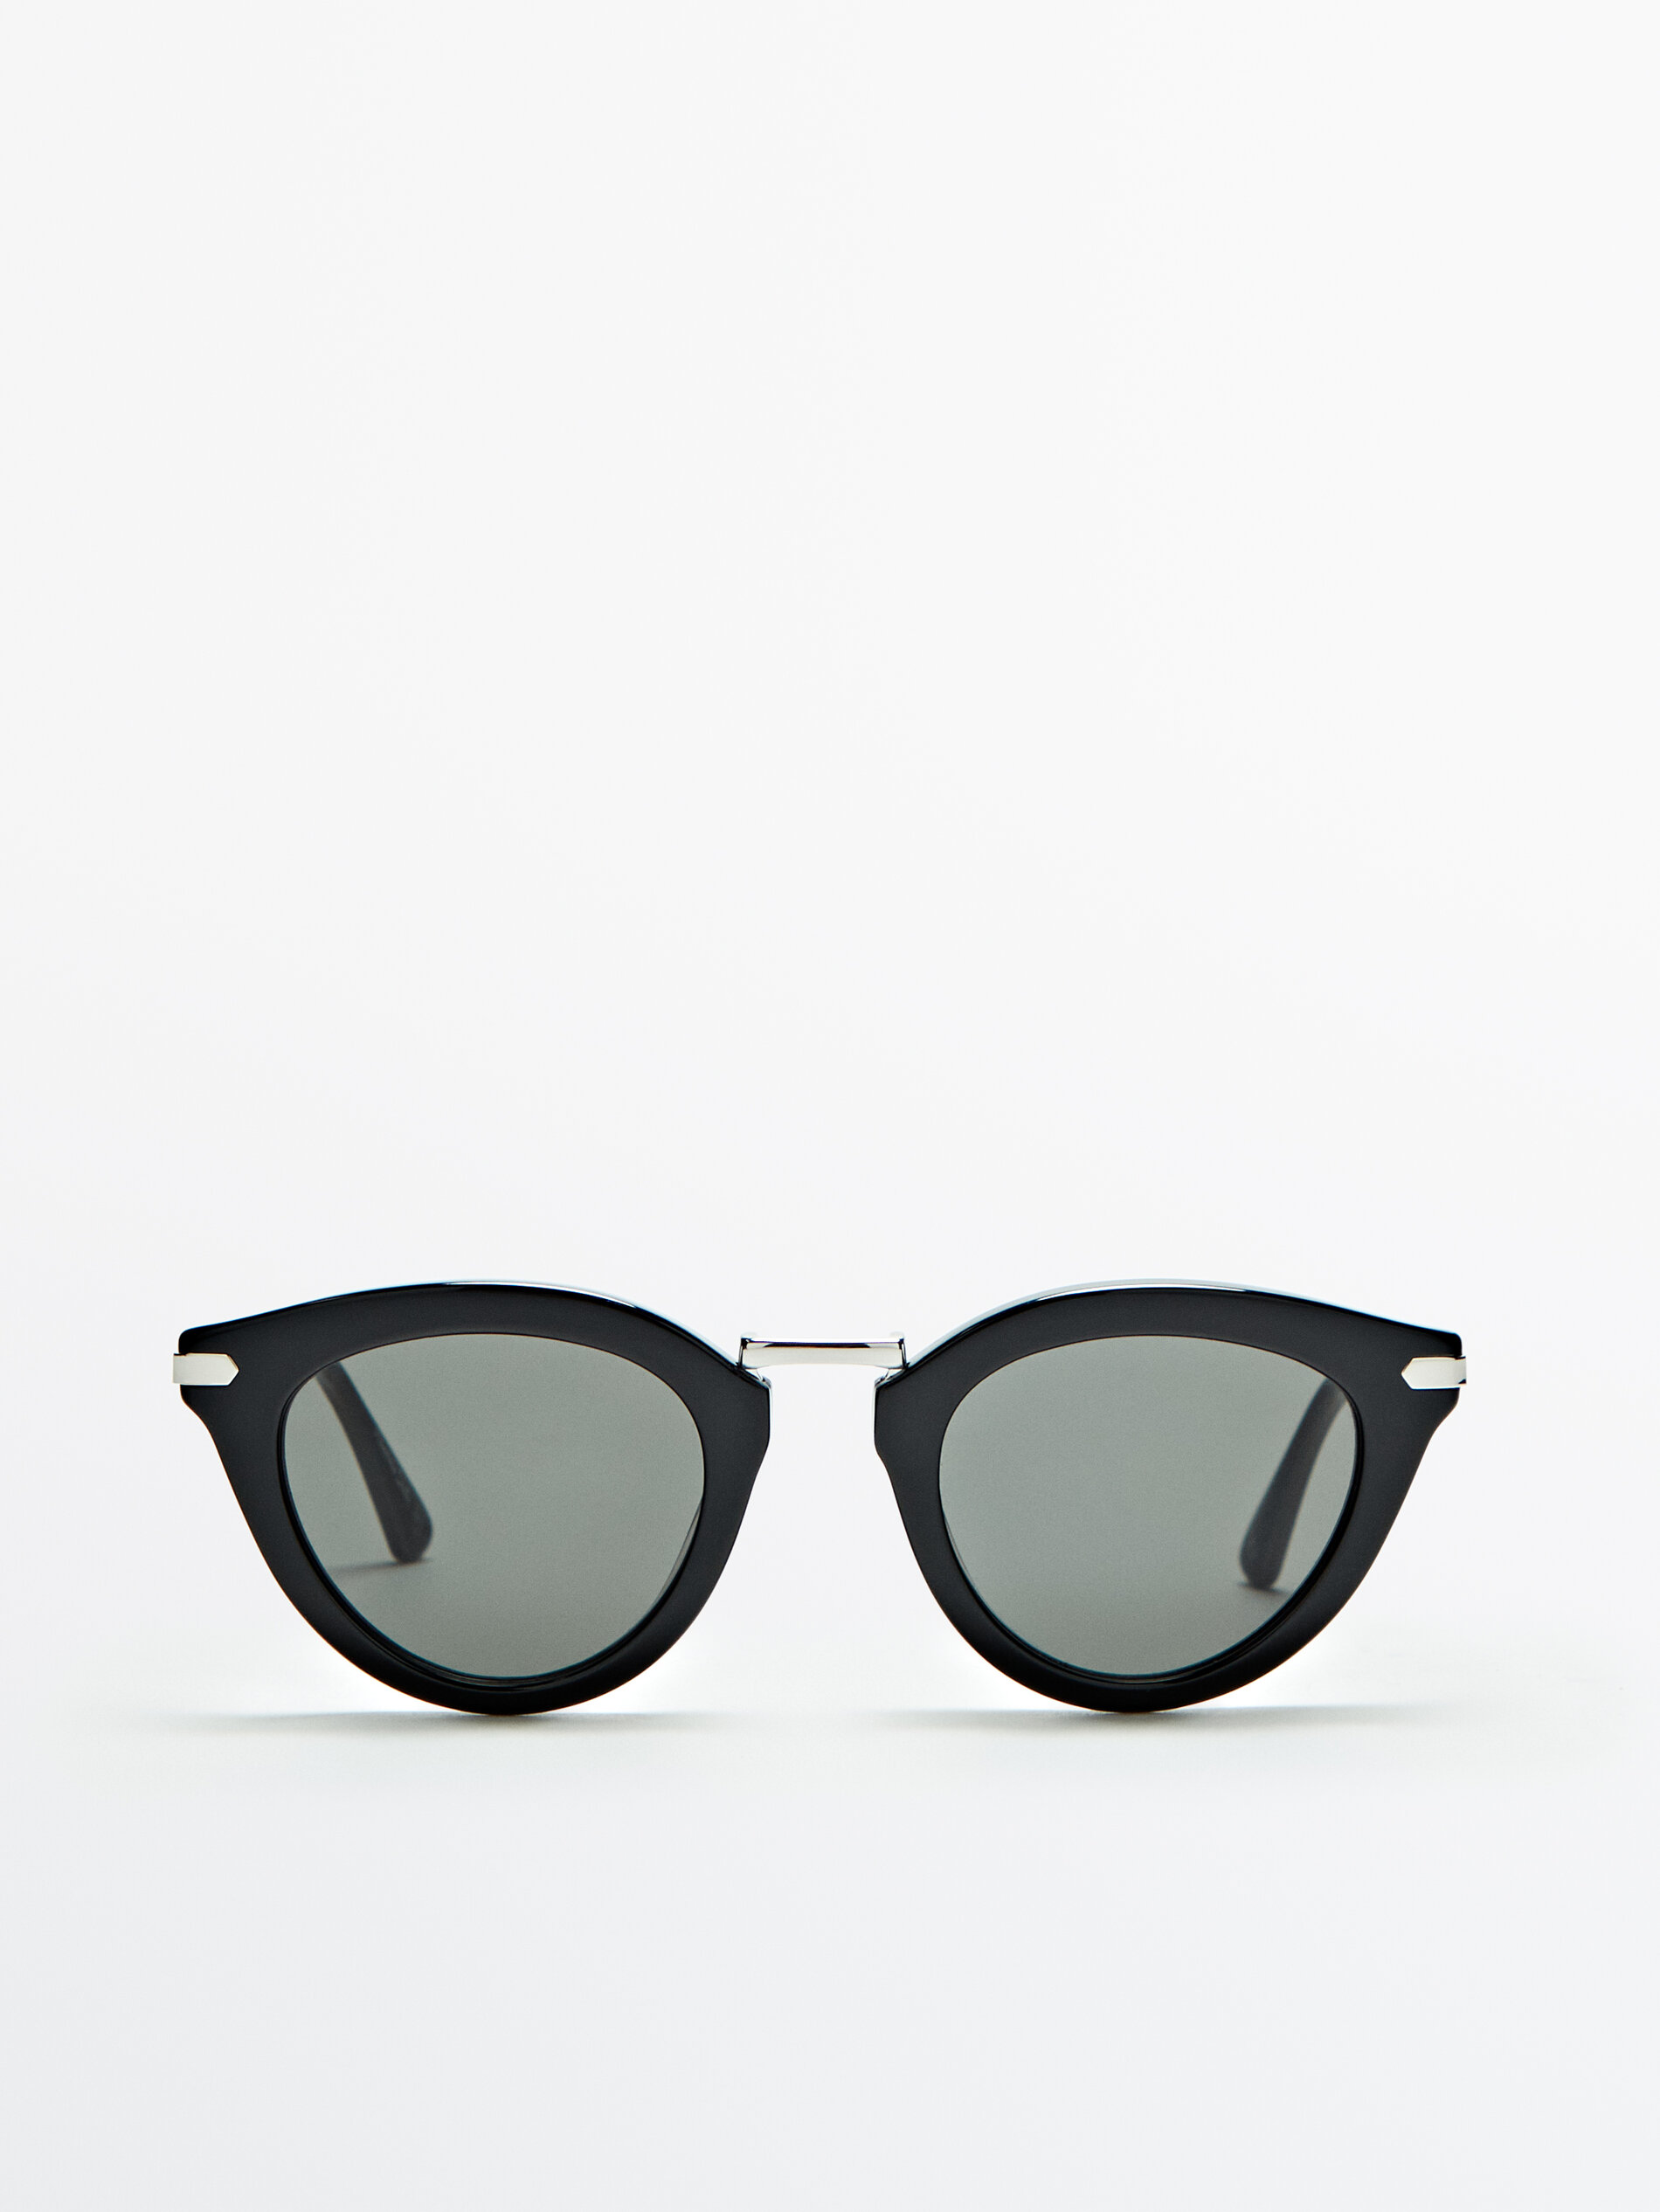 Accessories Sunglasses Oval Sunglasses Smith Oval Sunglasses blue-black casual look 